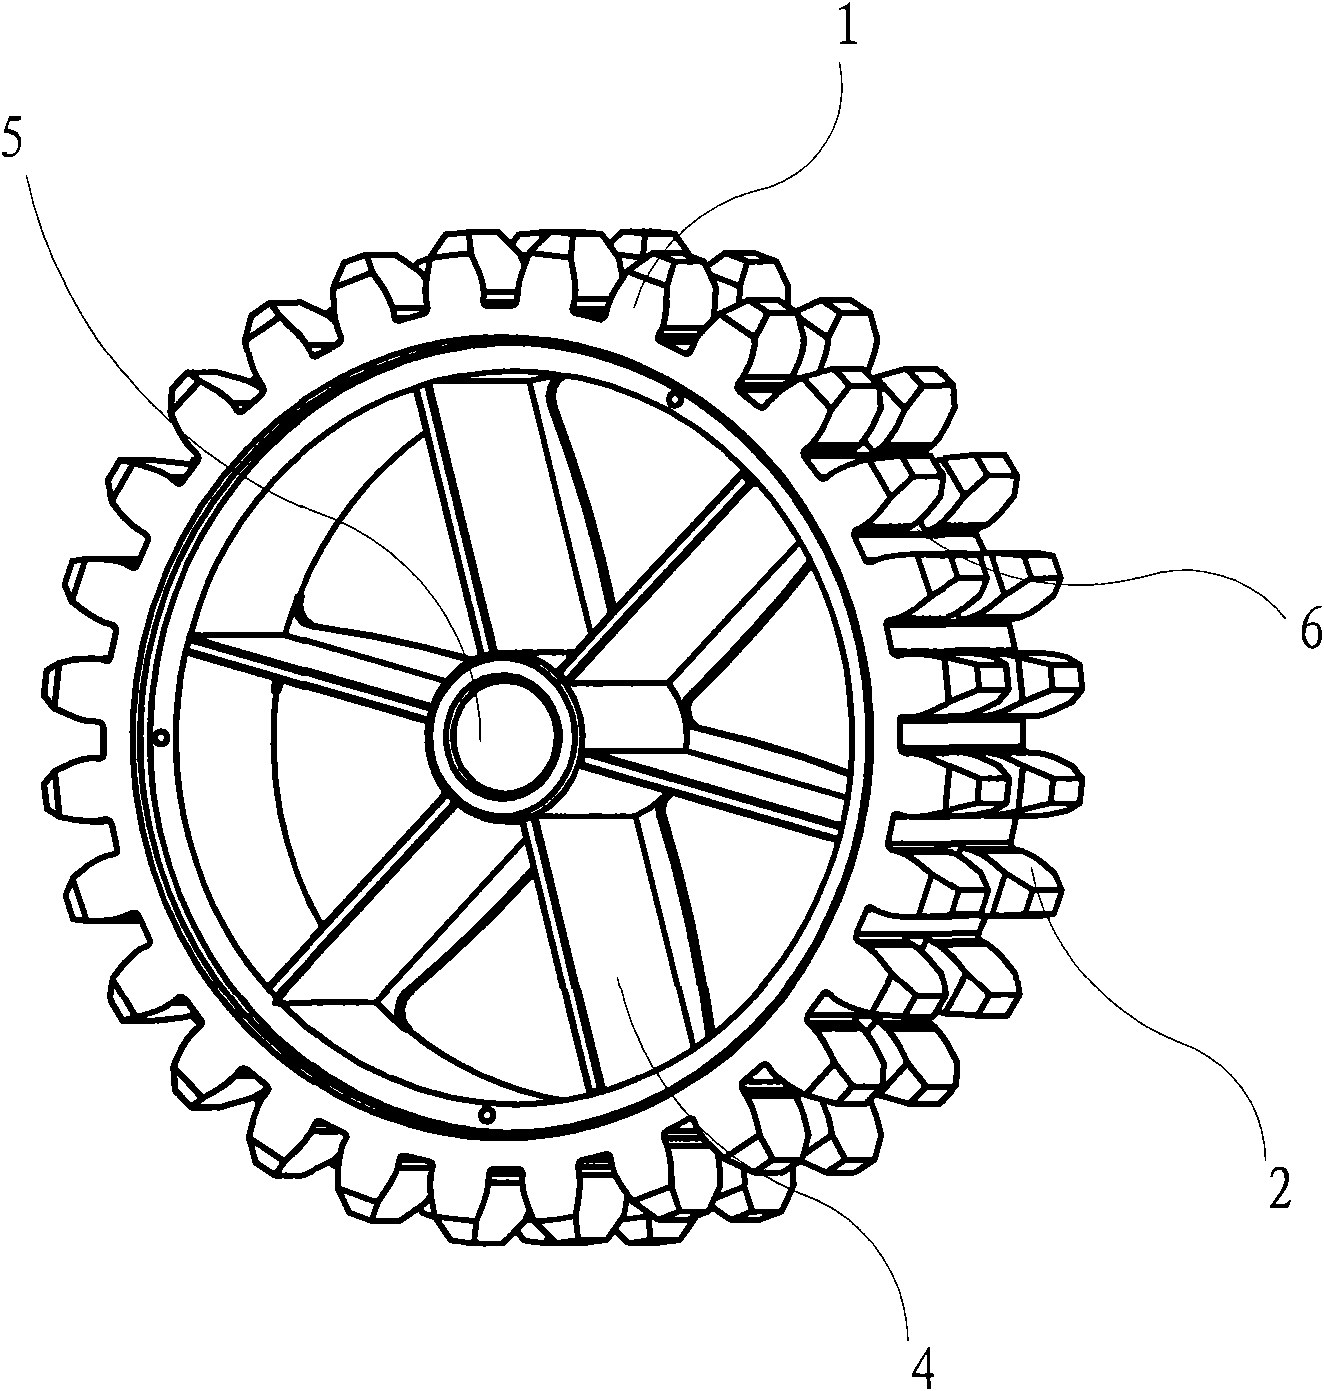 Disk knitter gear structure